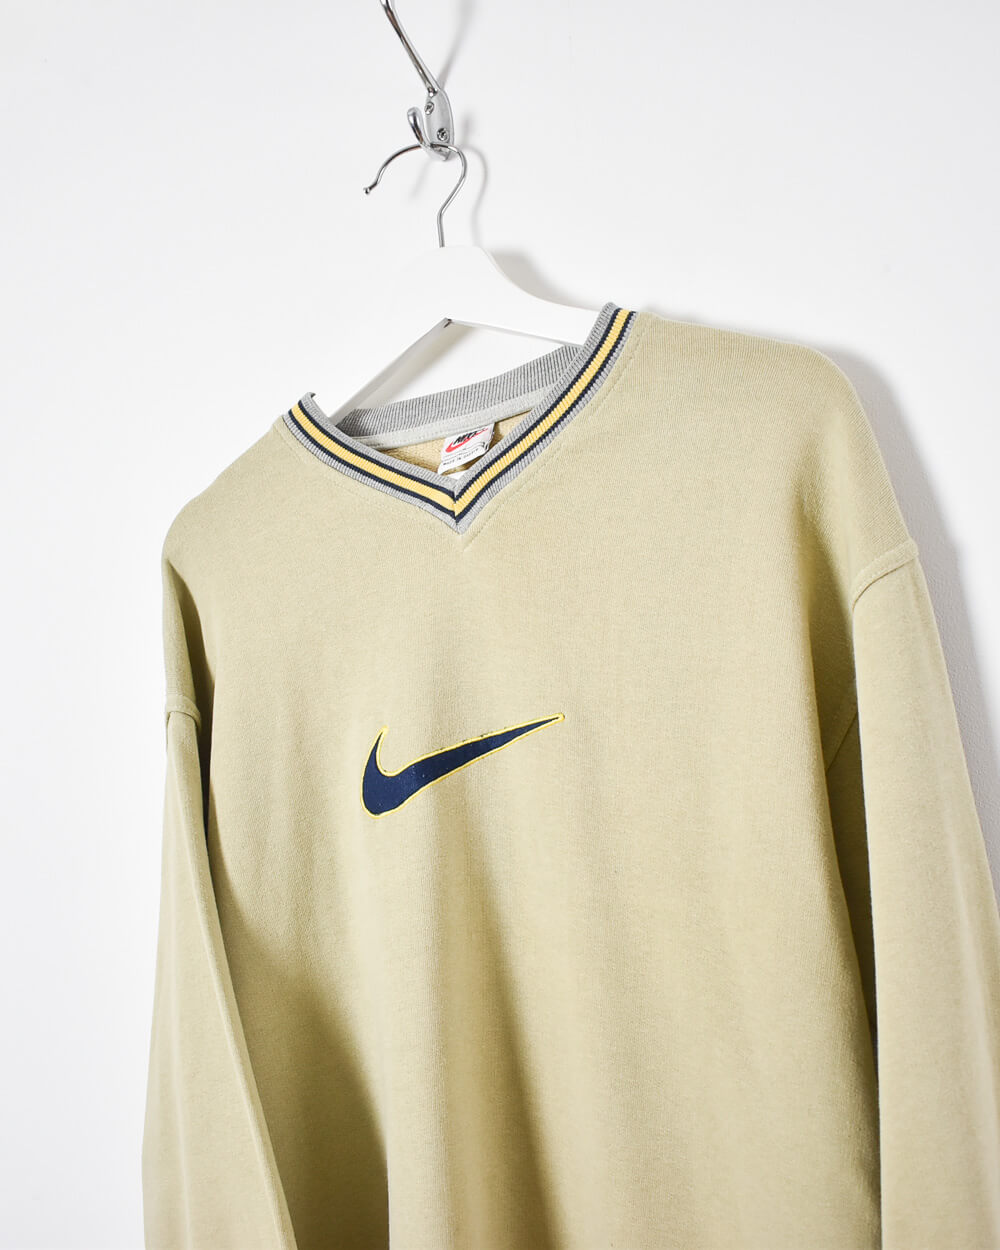 Khaki Nike Sweatshirt - Medium